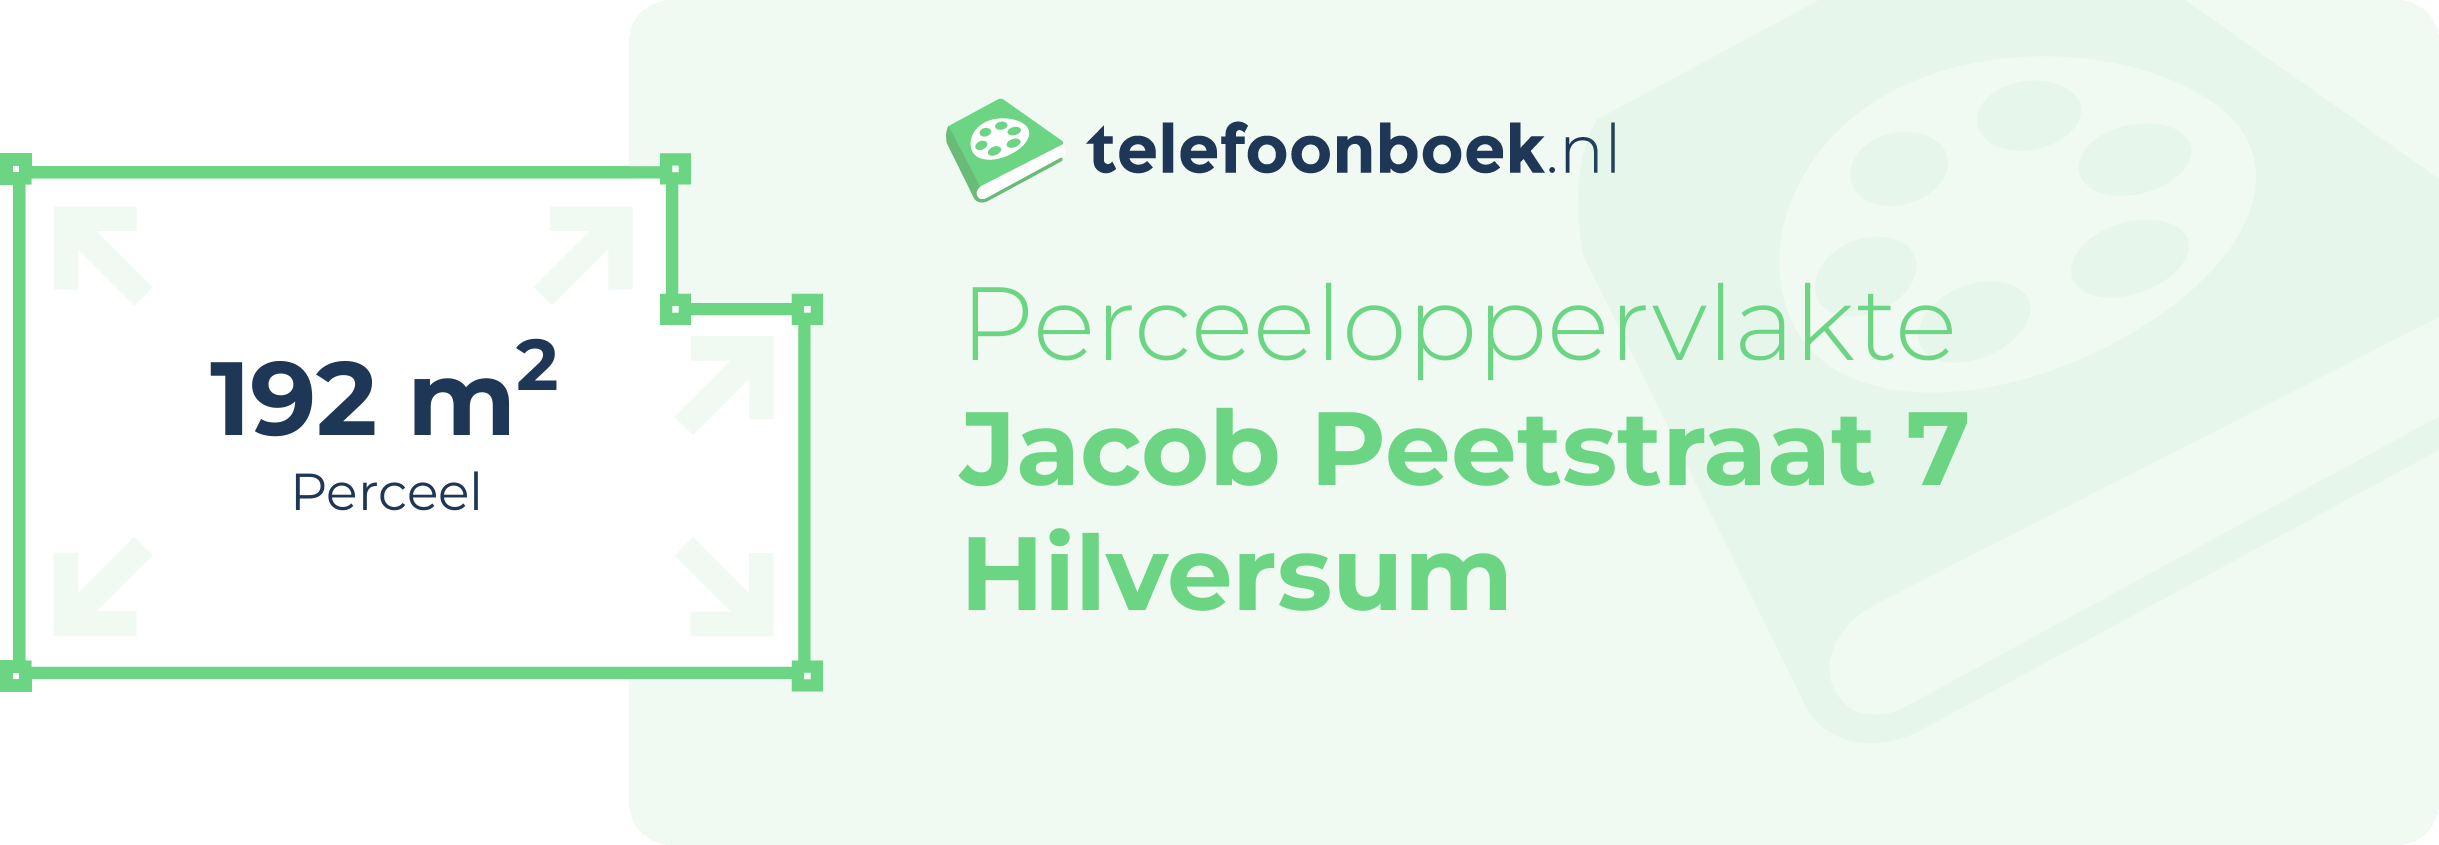 Perceeloppervlakte Jacob Peetstraat 7 Hilversum